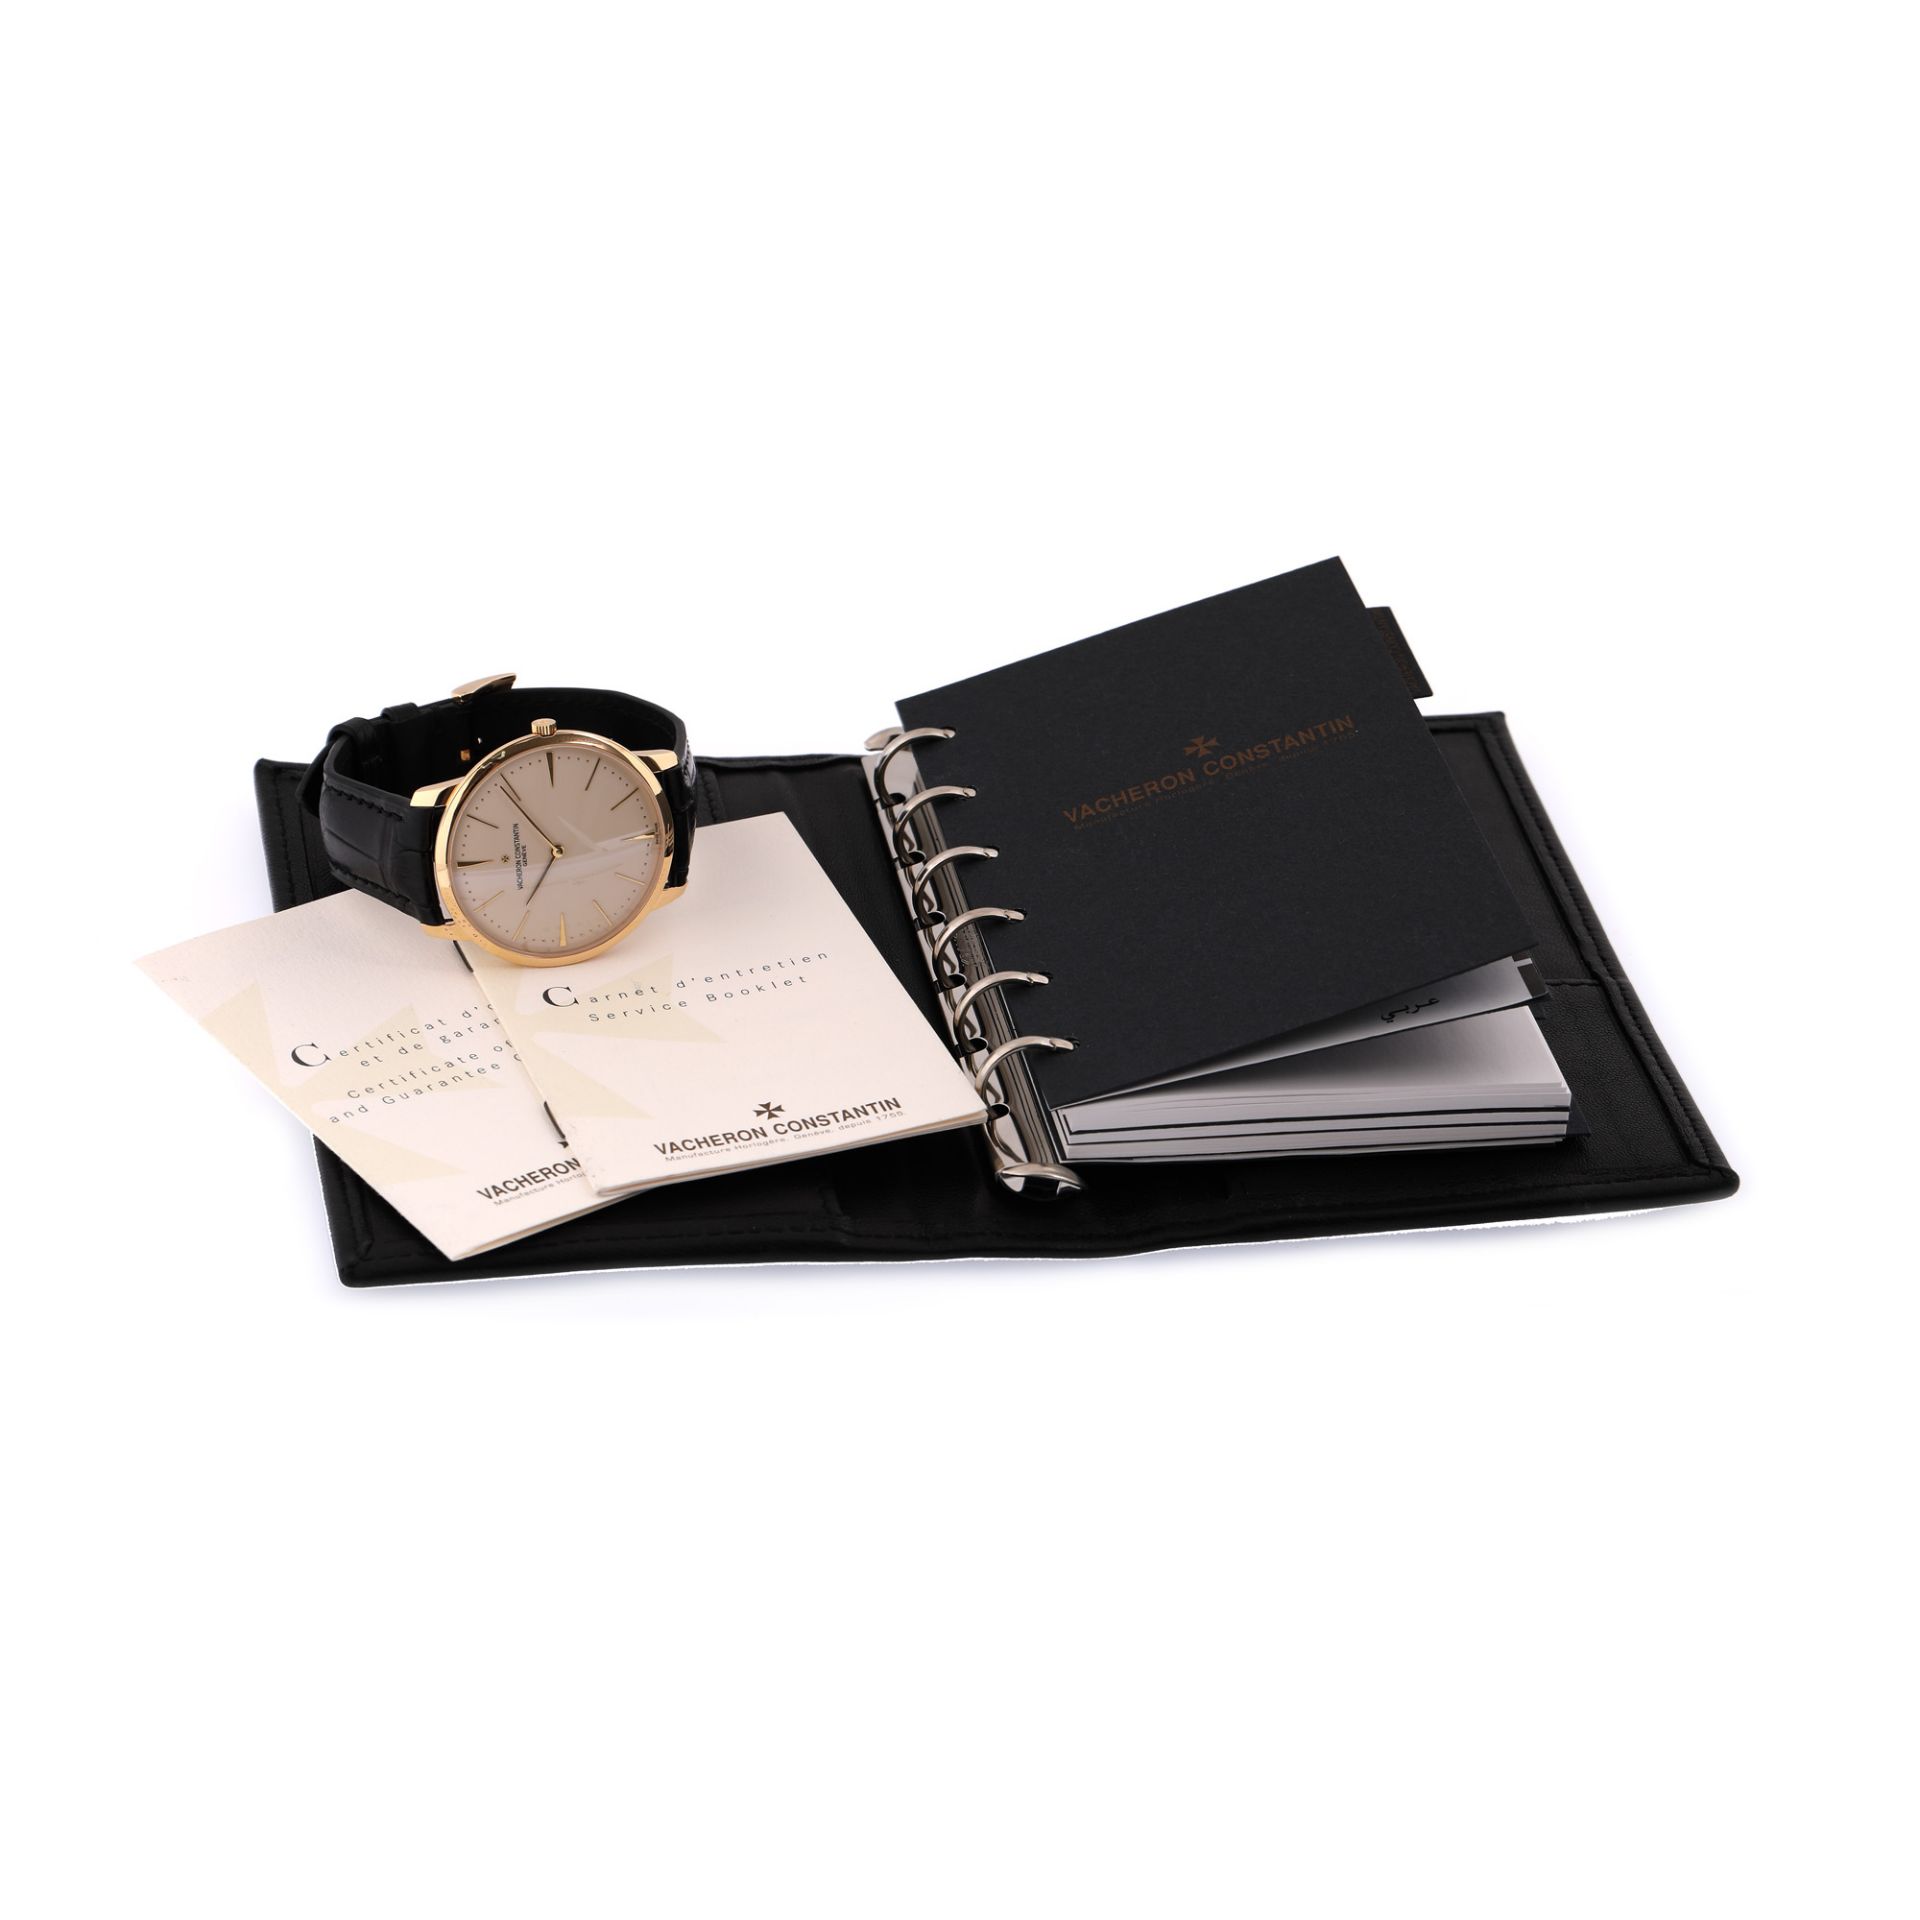 Vacheron Constantin Patrimony wristwatch, gold, men, guarantee certificate and original box - Image 5 of 5